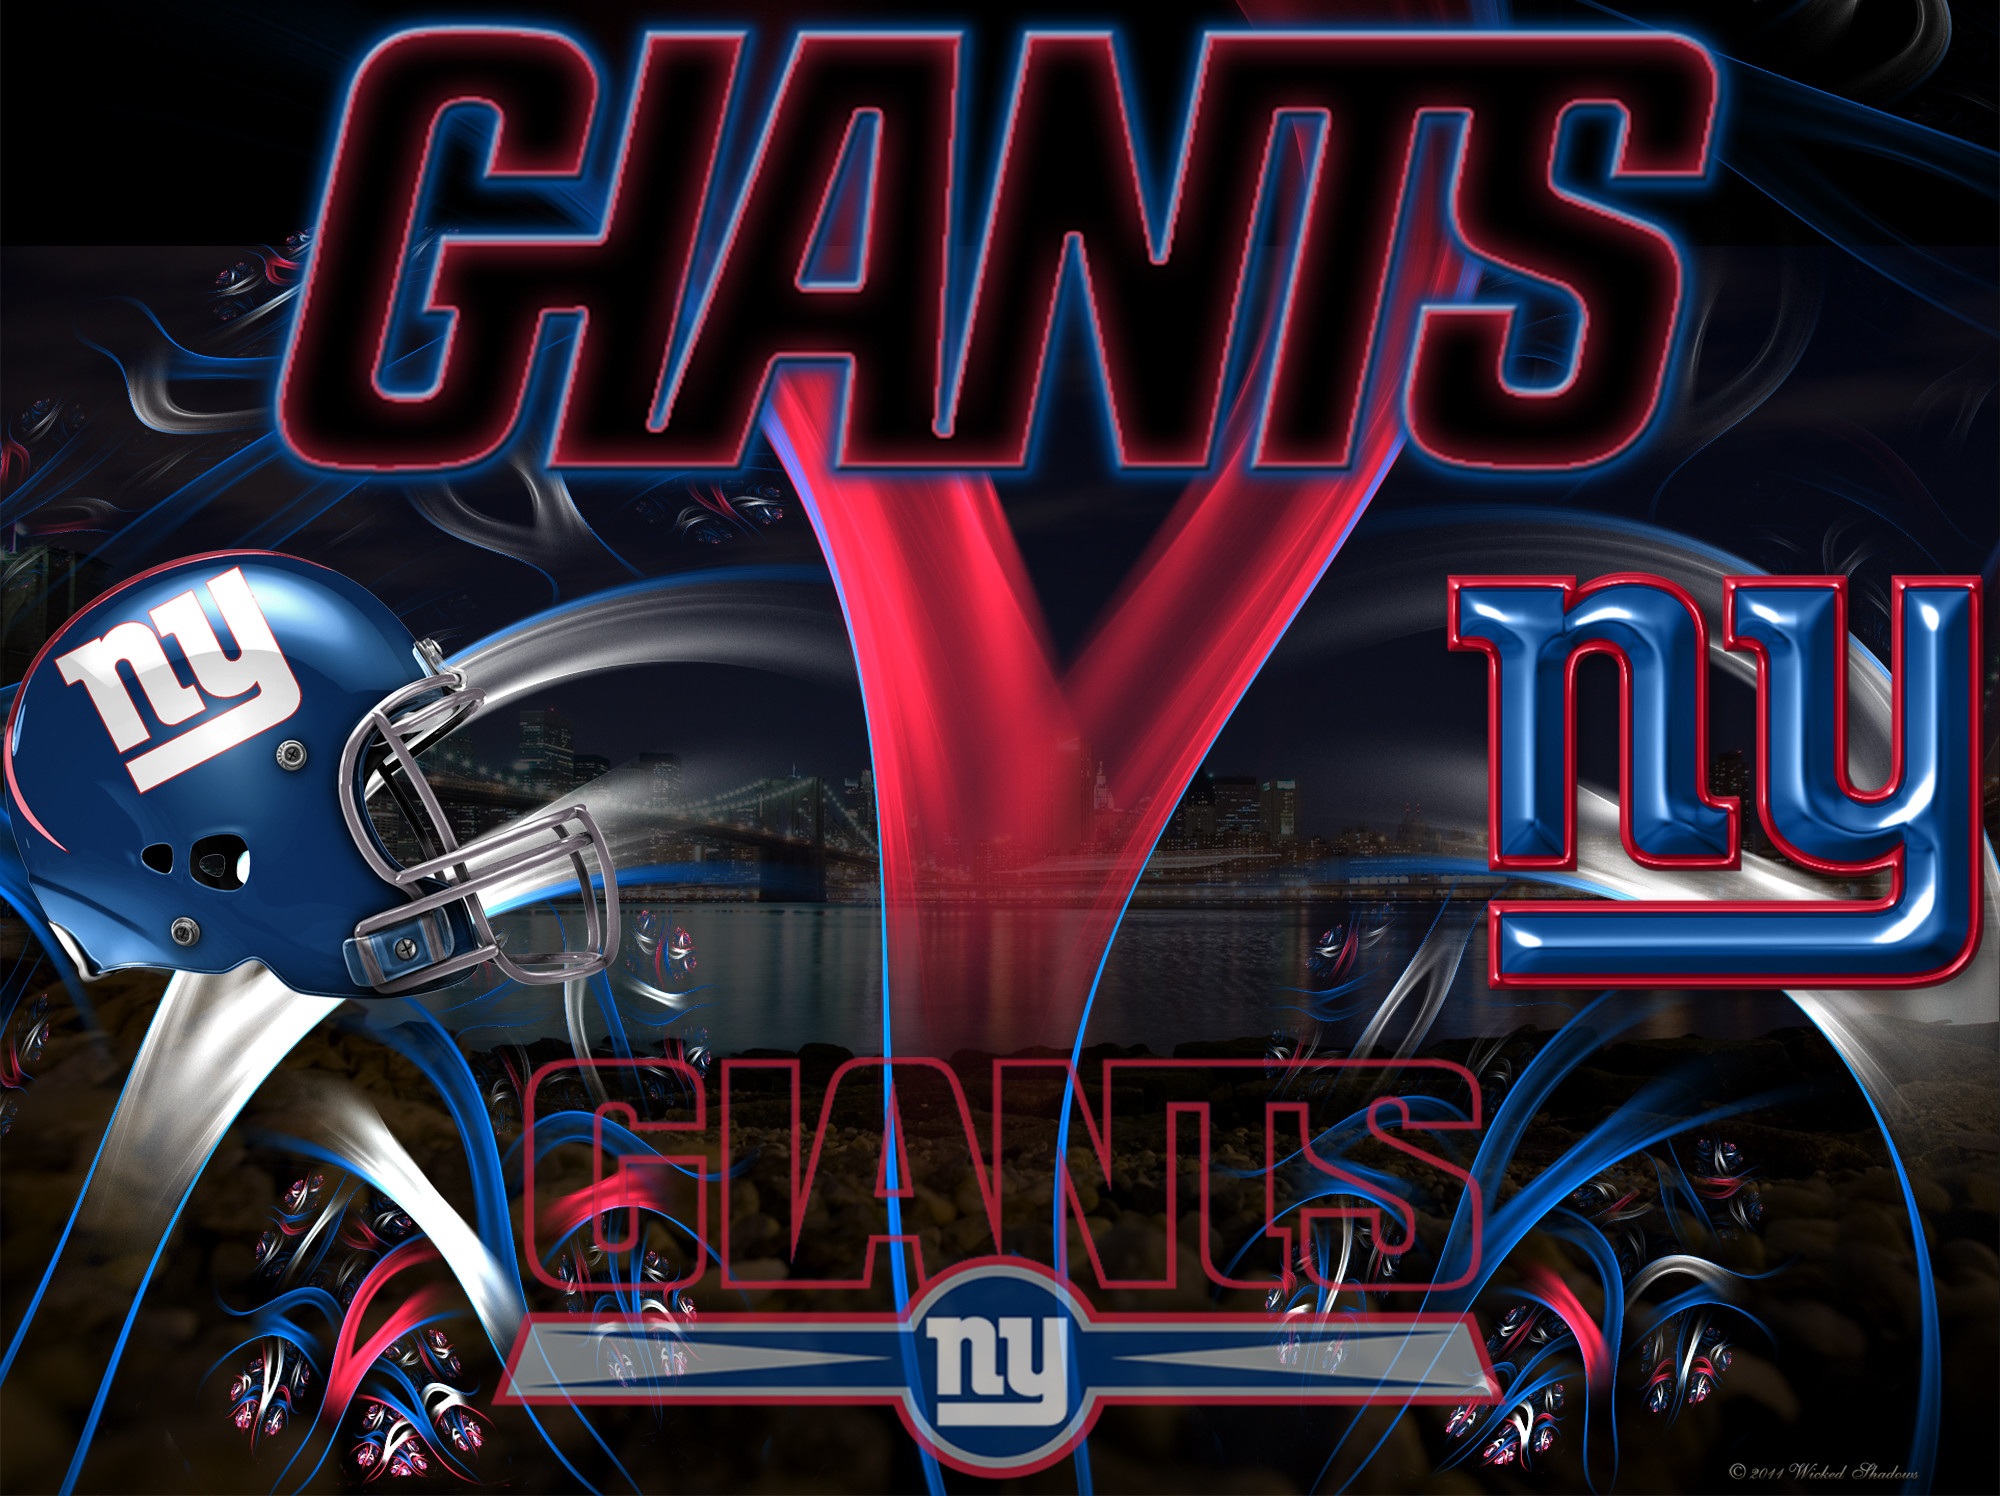 Free New York Giants wallpaper | New York Giants wallpapers